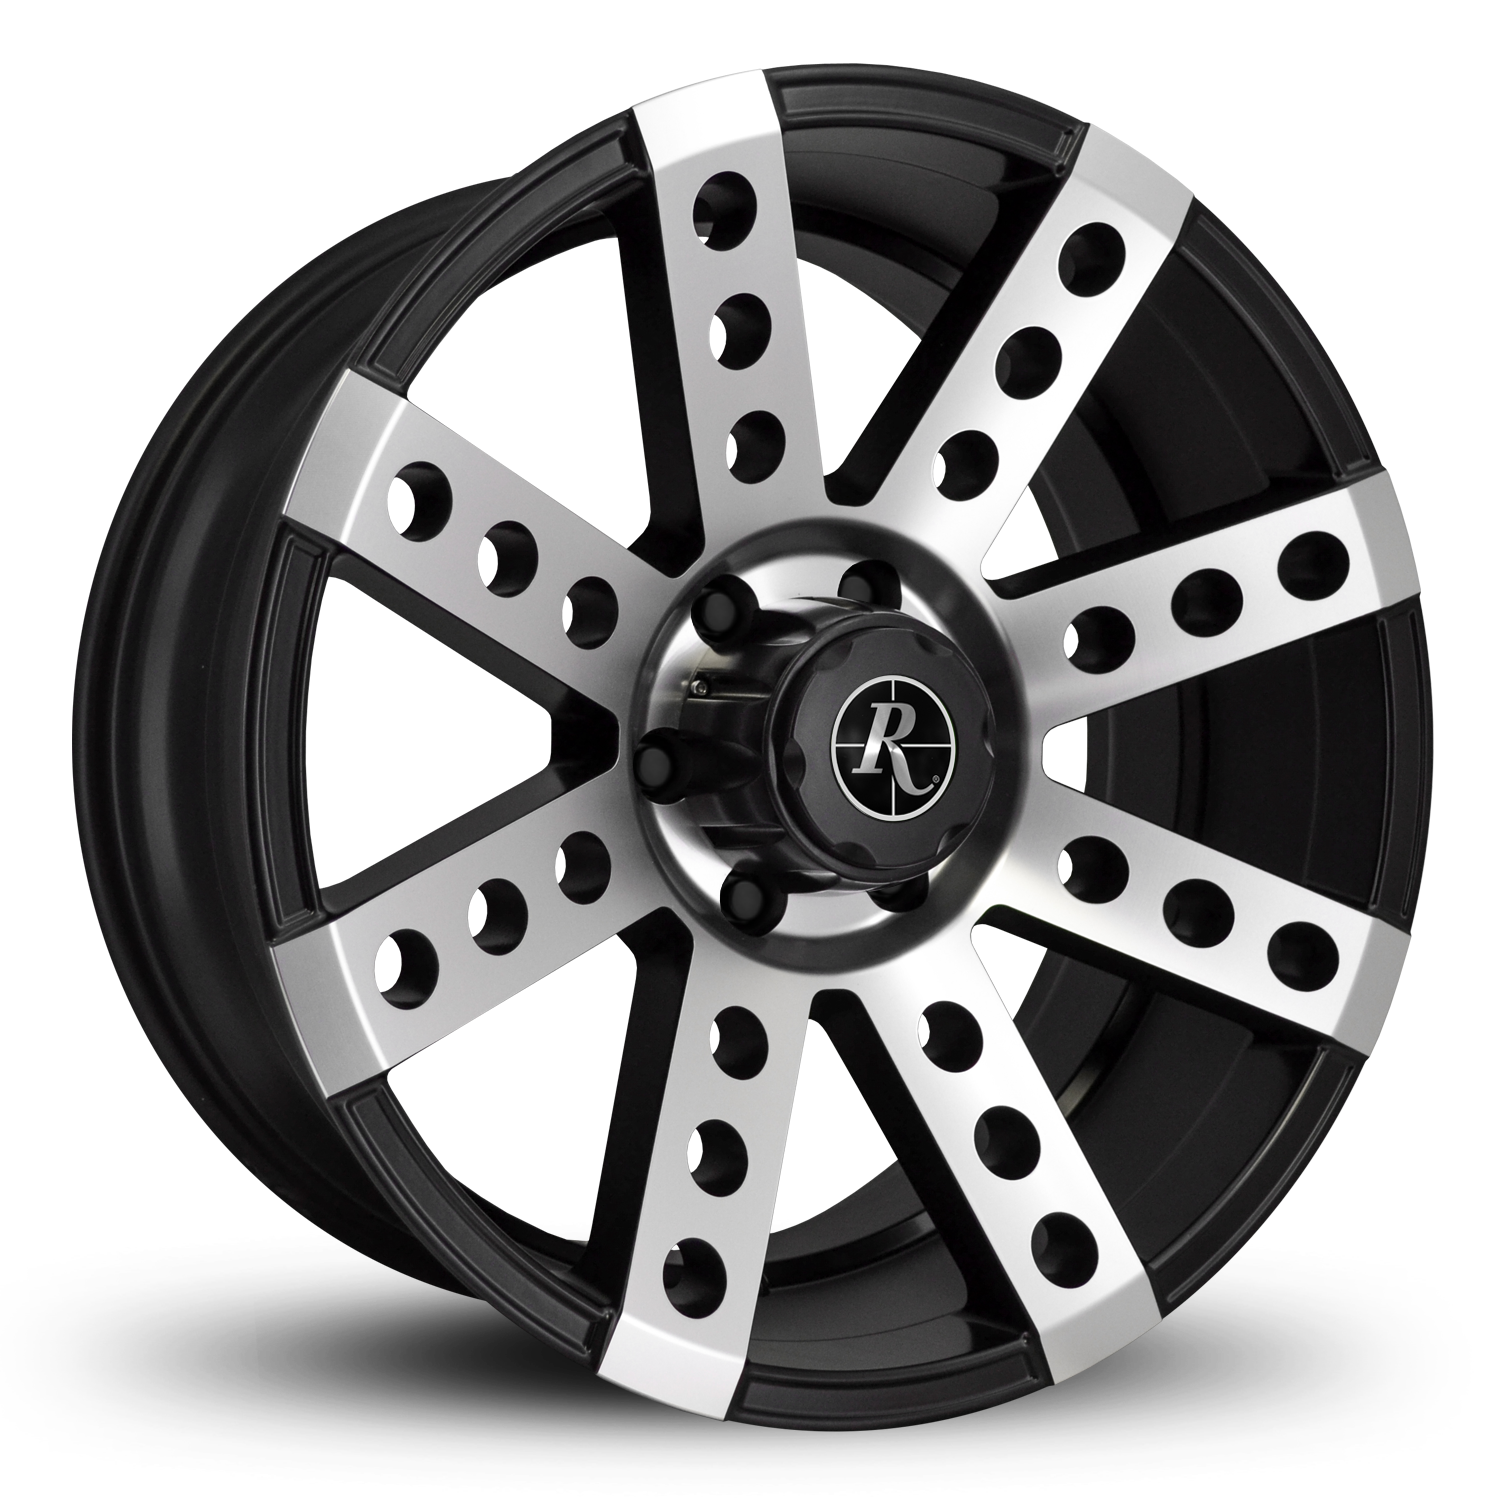 Buy Replacement Center Caps for the Remingotn Buckshot Wheel Rims